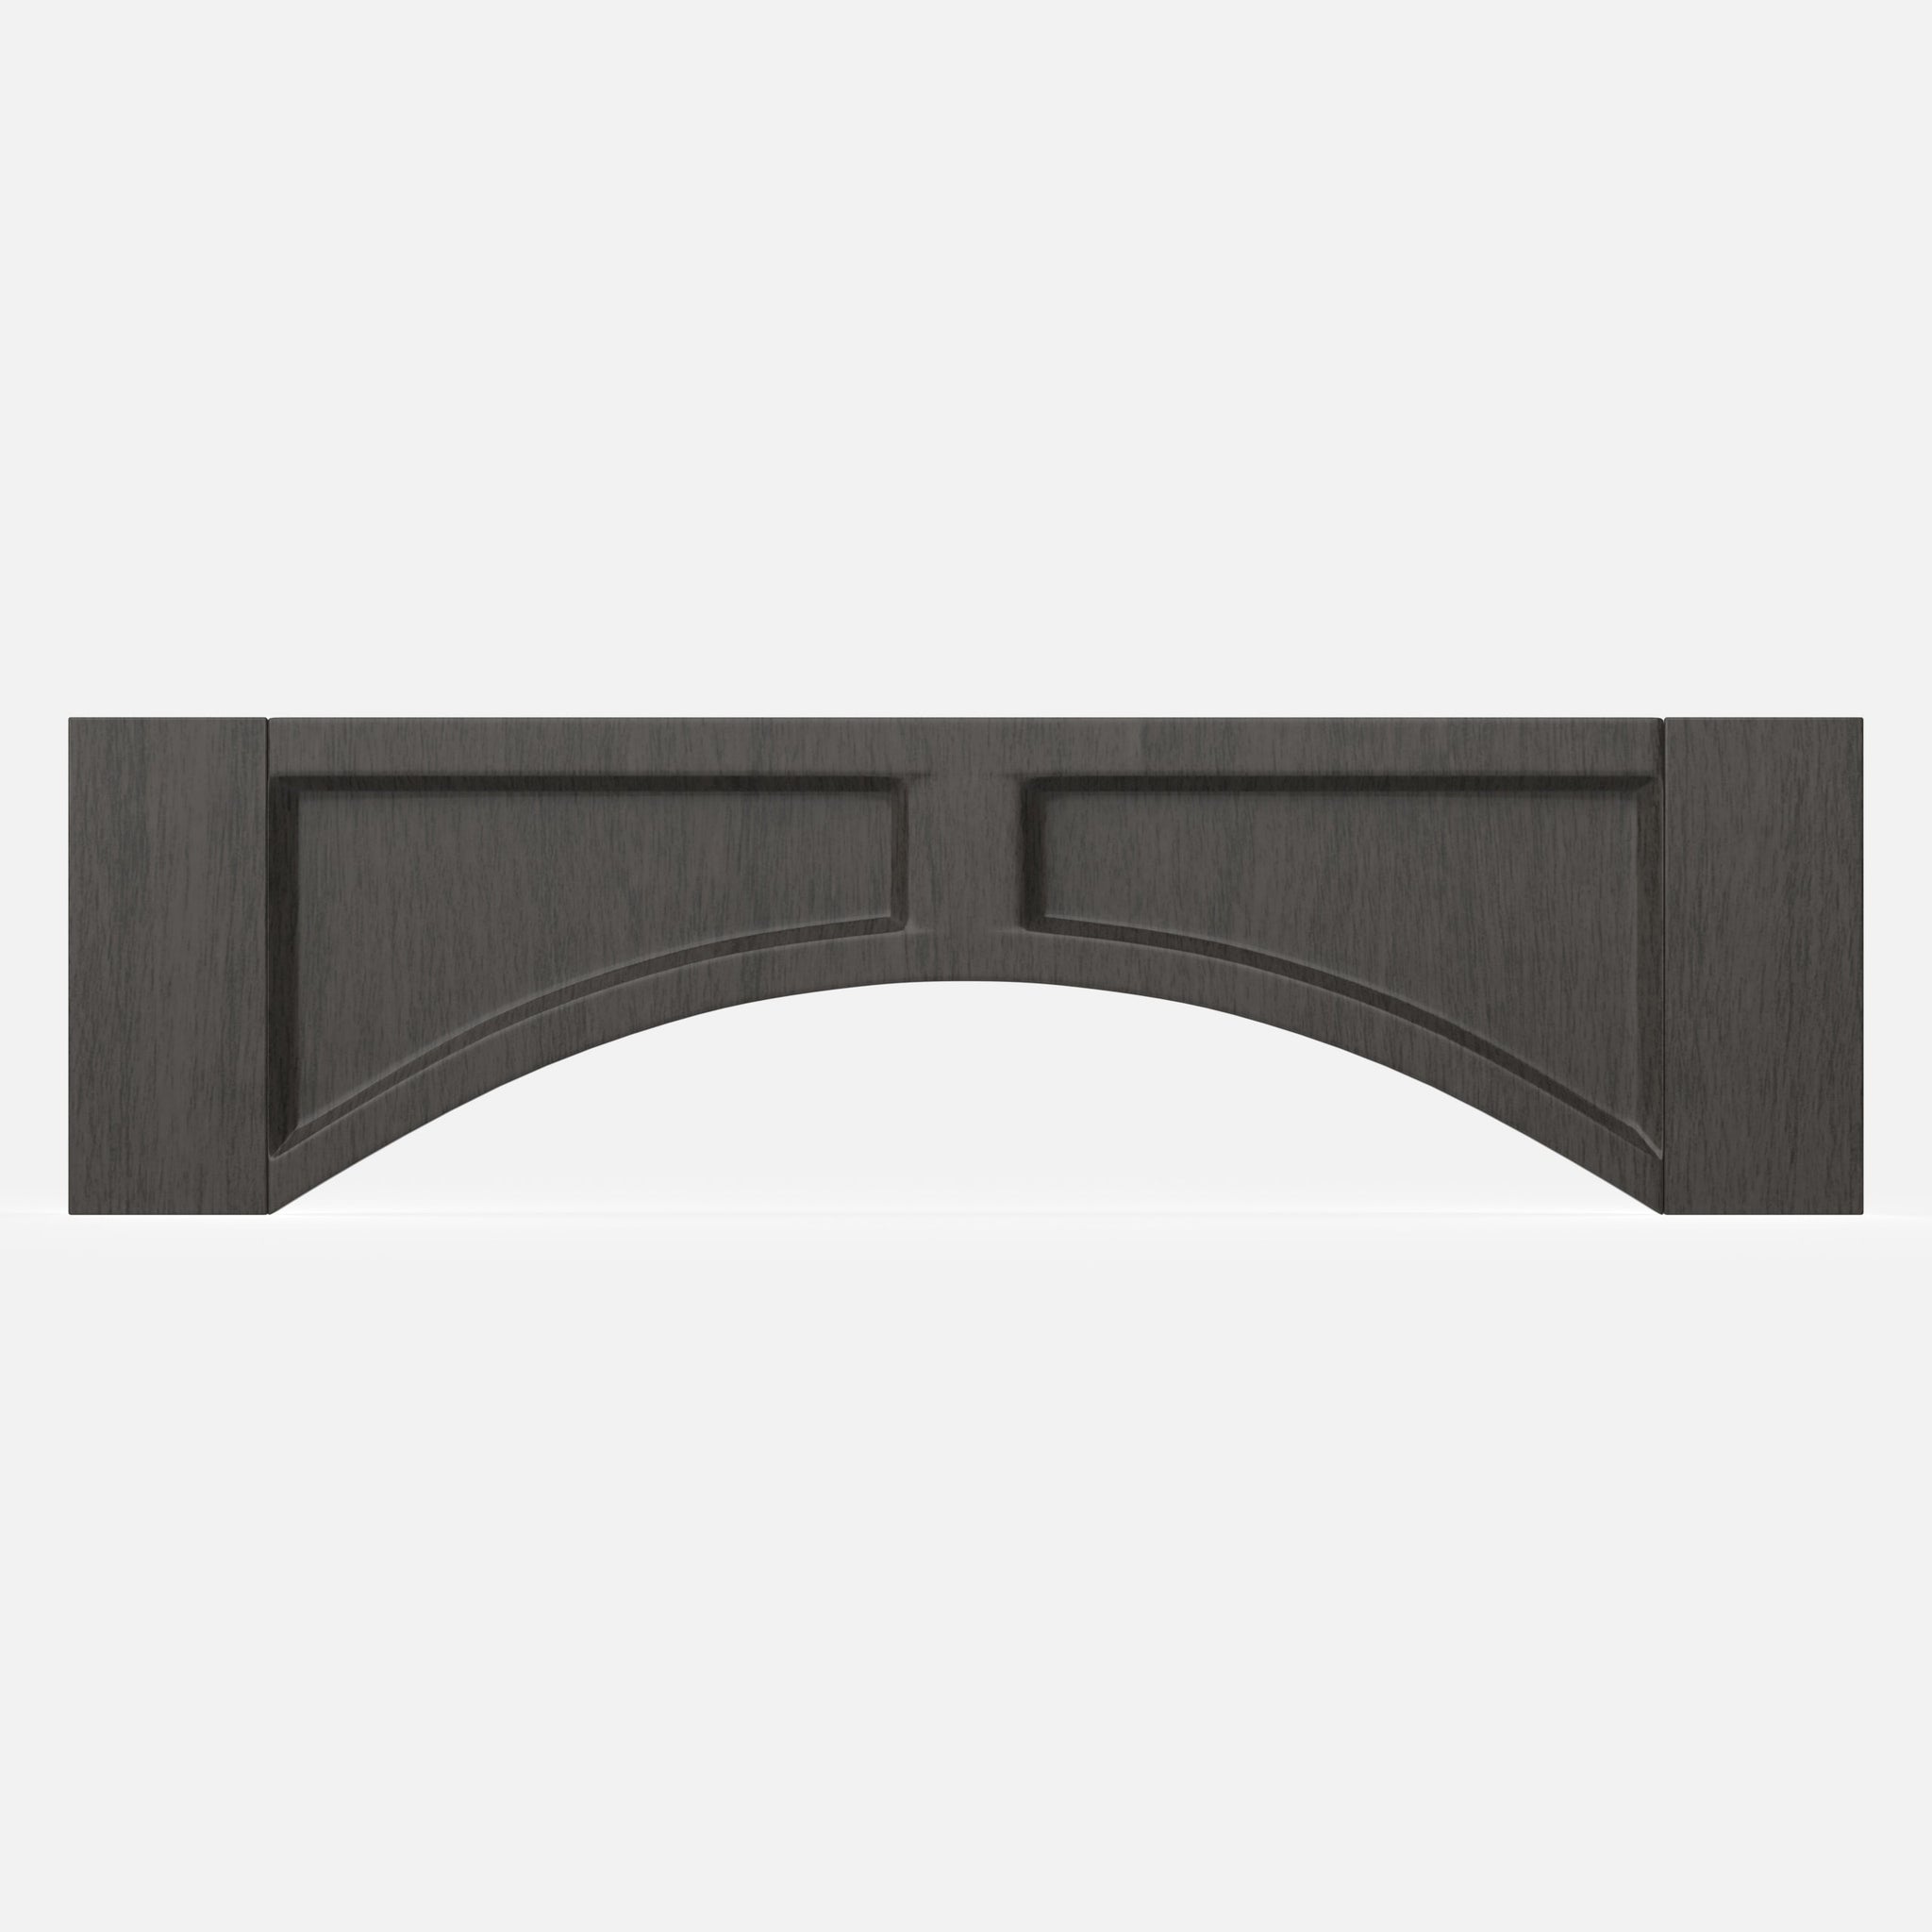 RTA - Elegant Smoky Grey - Arched Valance - Raised Panel | 36"W x 10"H